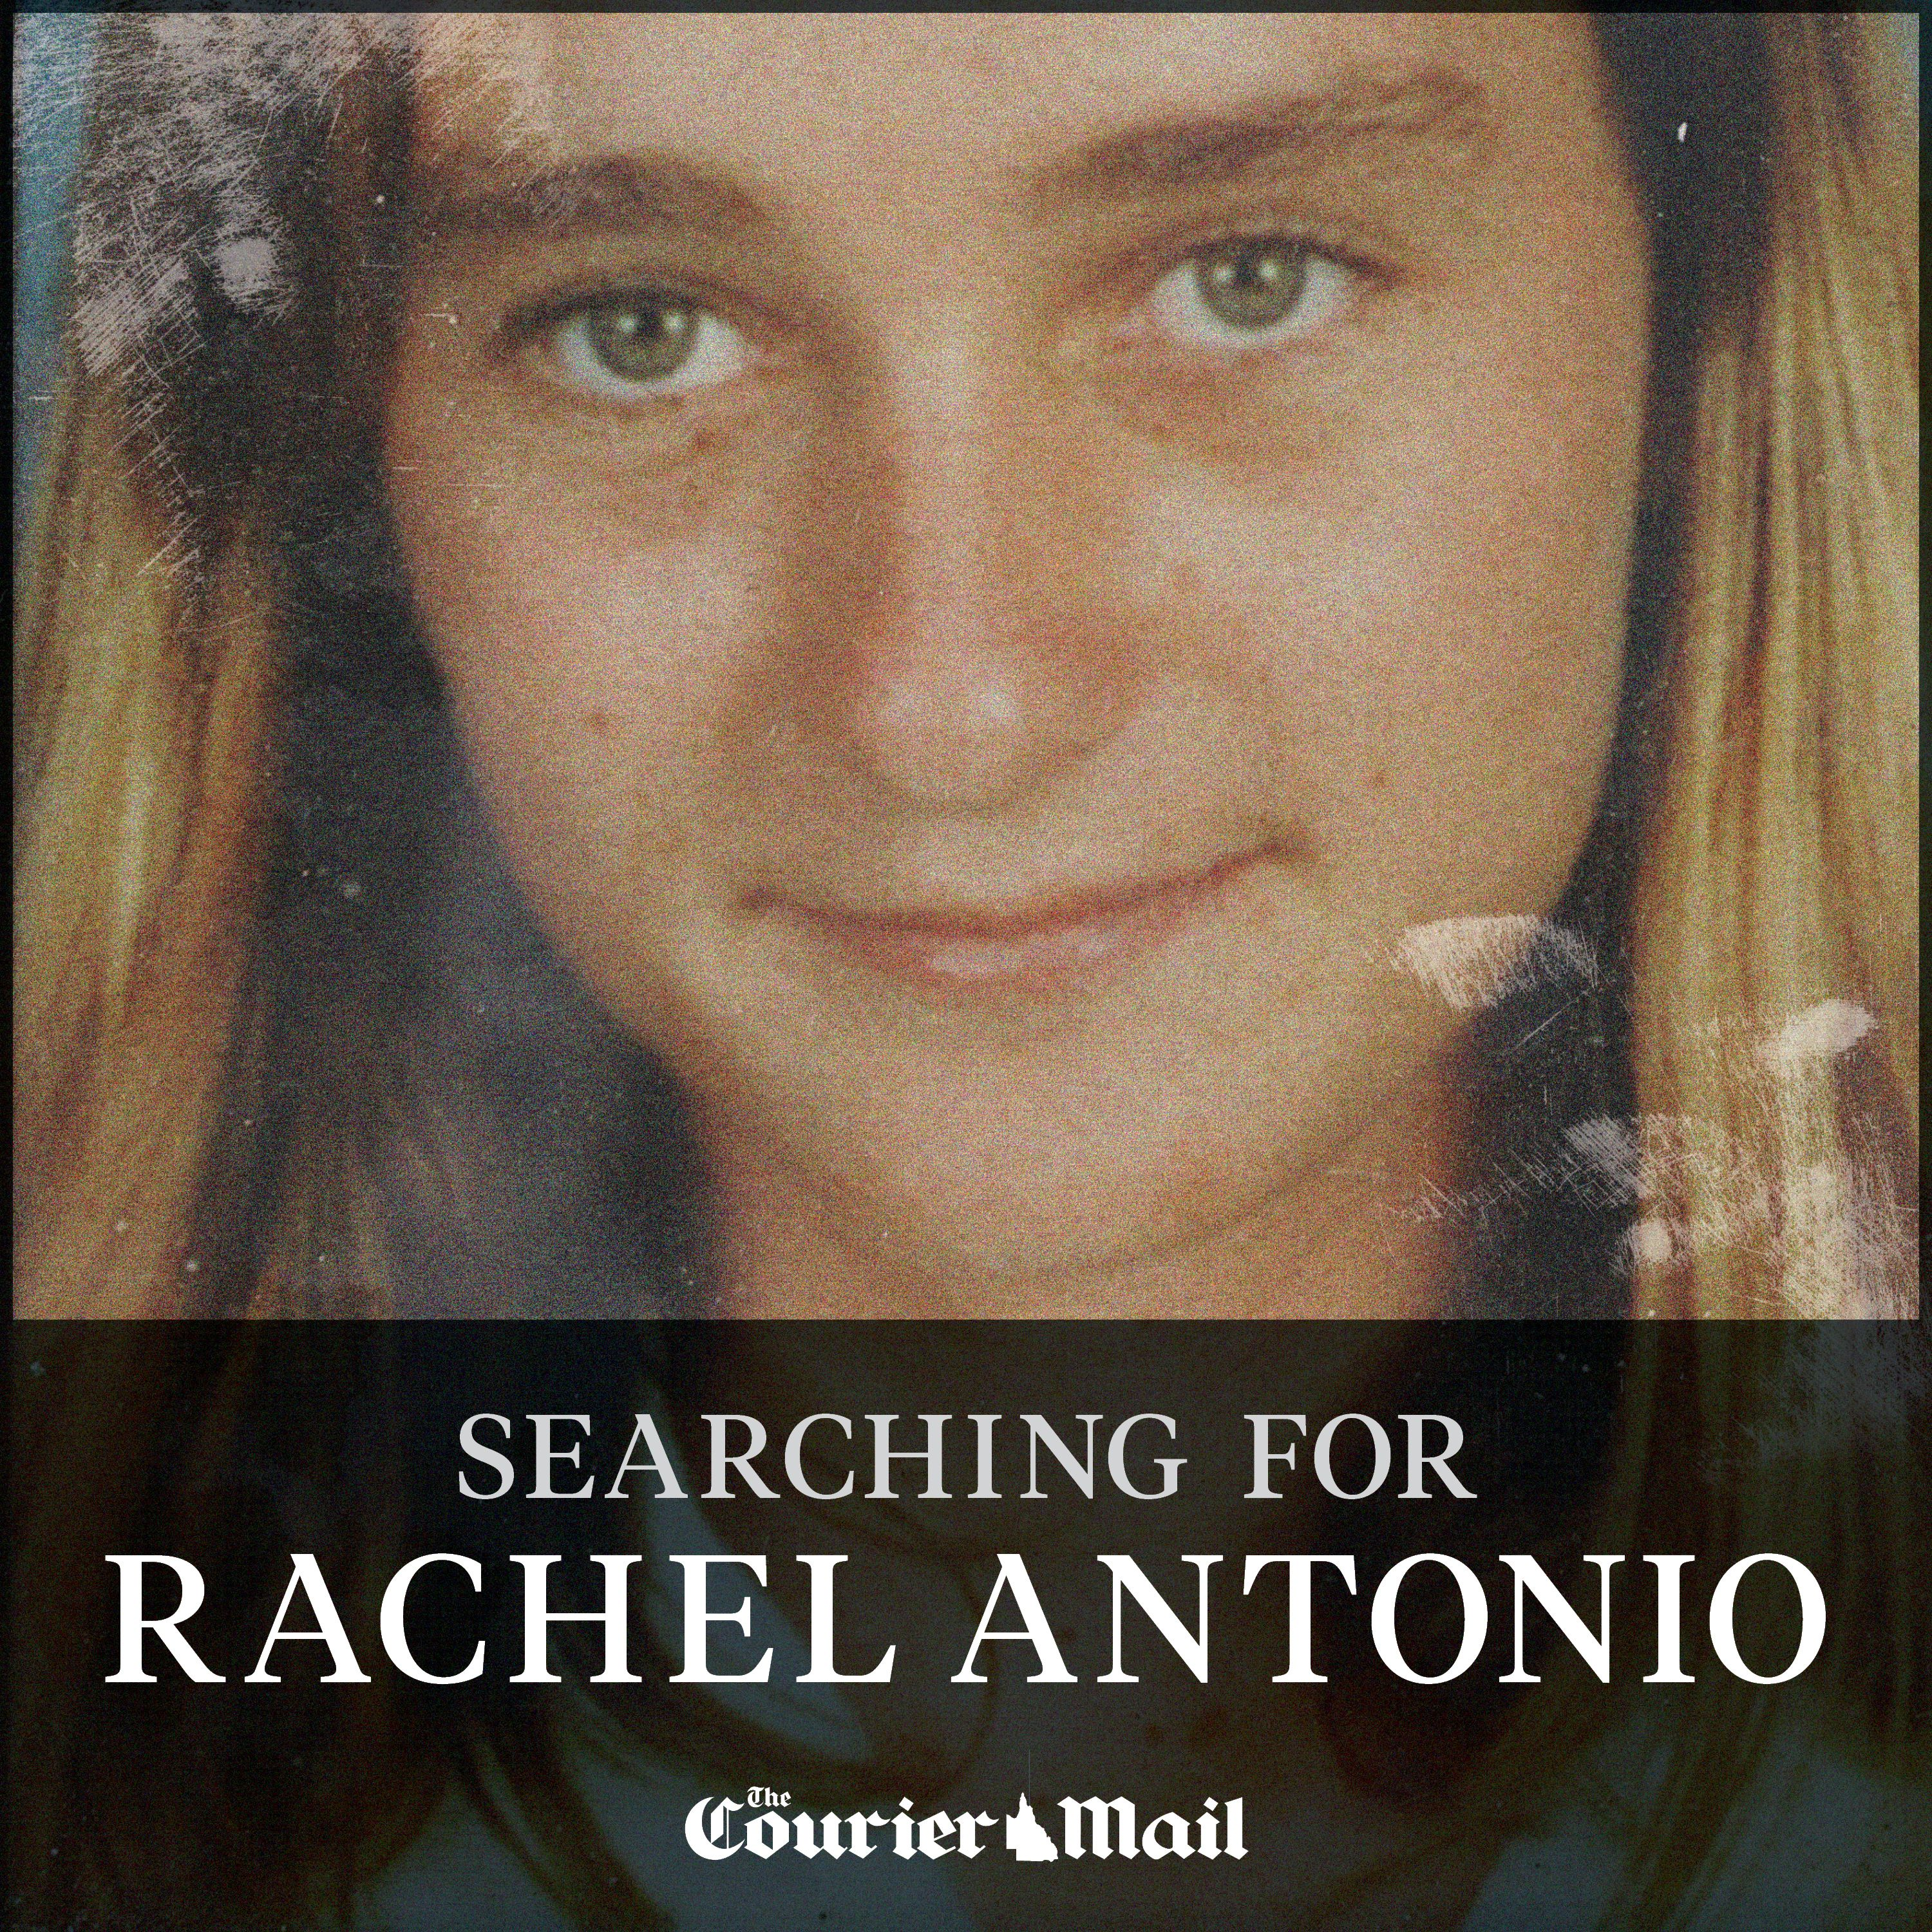 Coming soon: Searching for Rachel Antonio